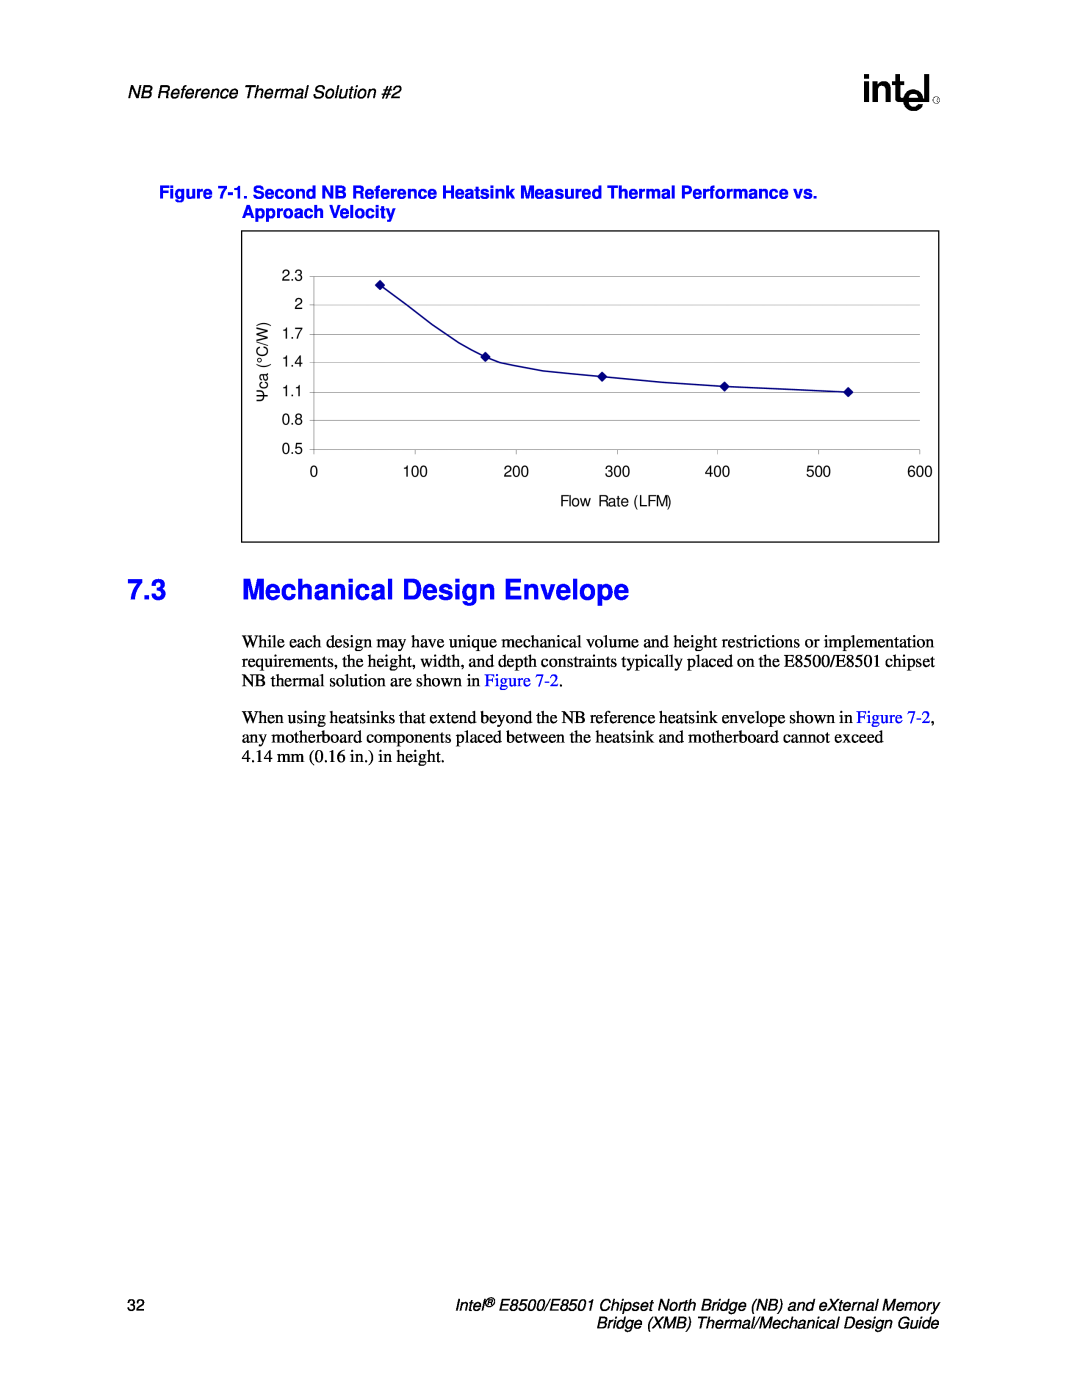 Intel E8501 manual 7.3Mechanical Design Envelope, NB Reference Thermal Solution #2 